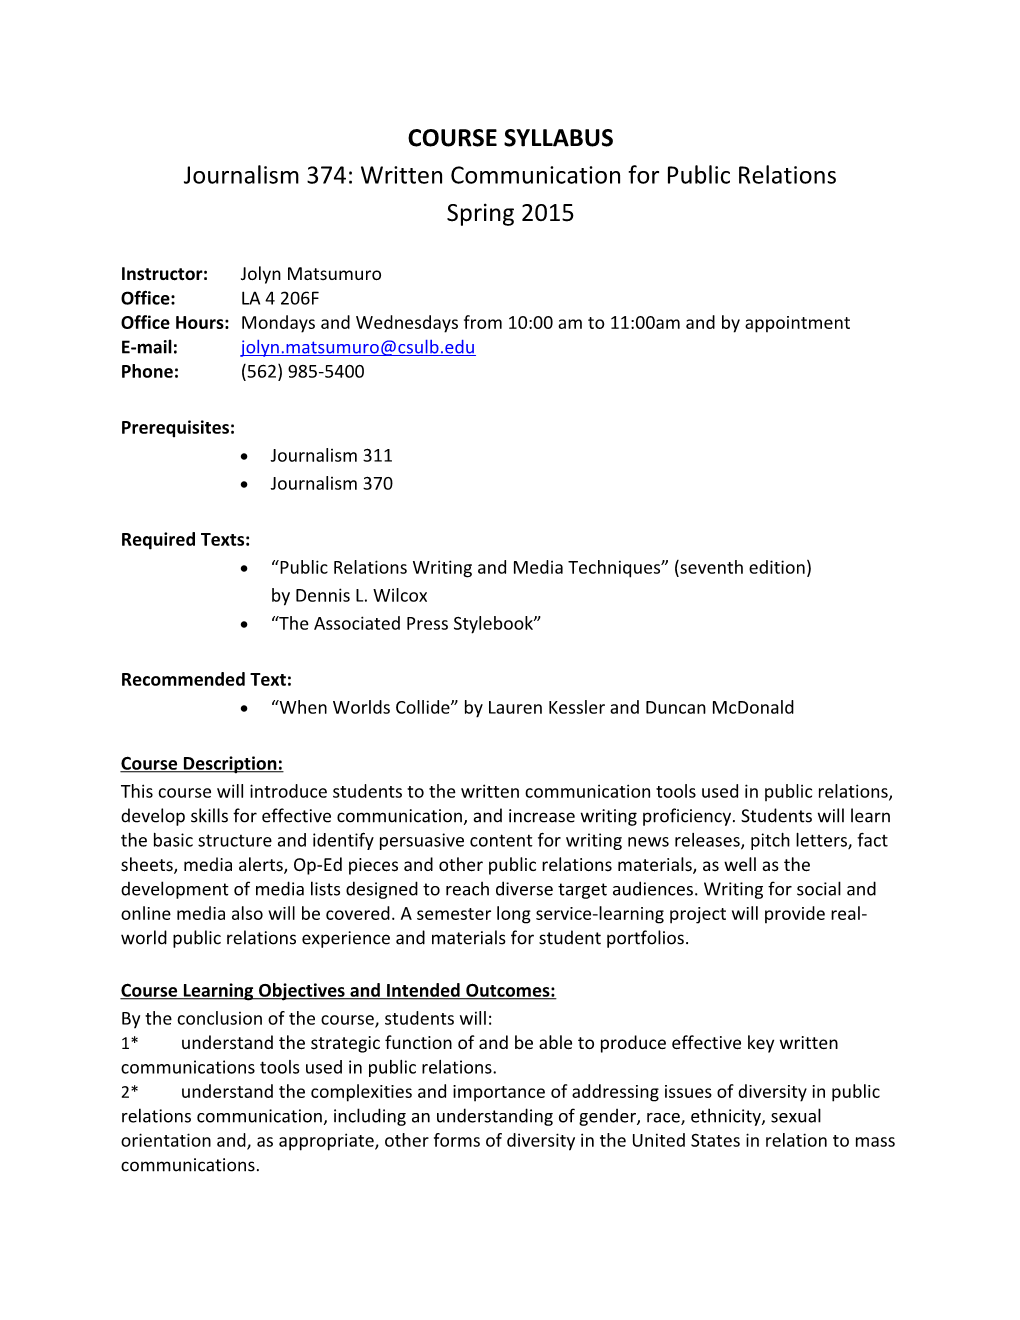 Journalism 374: Written Communication for Public Relations